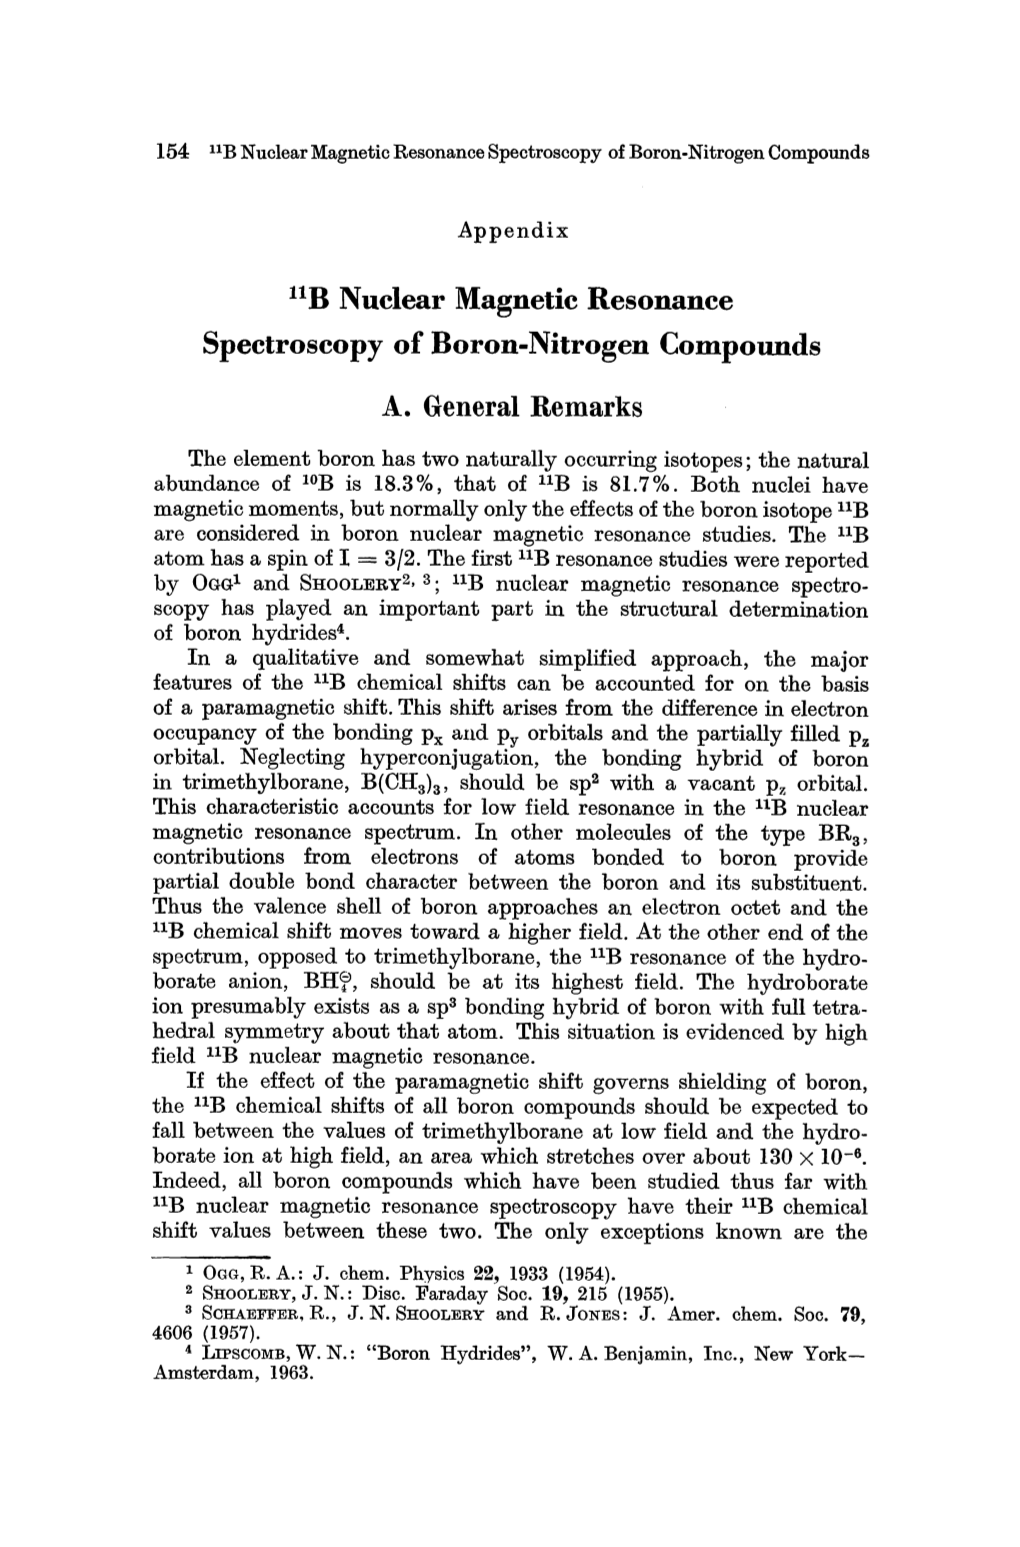 11 B Nuclear Magnetic Resonance Spectroscopy of Boron-Nitrogen Compounds